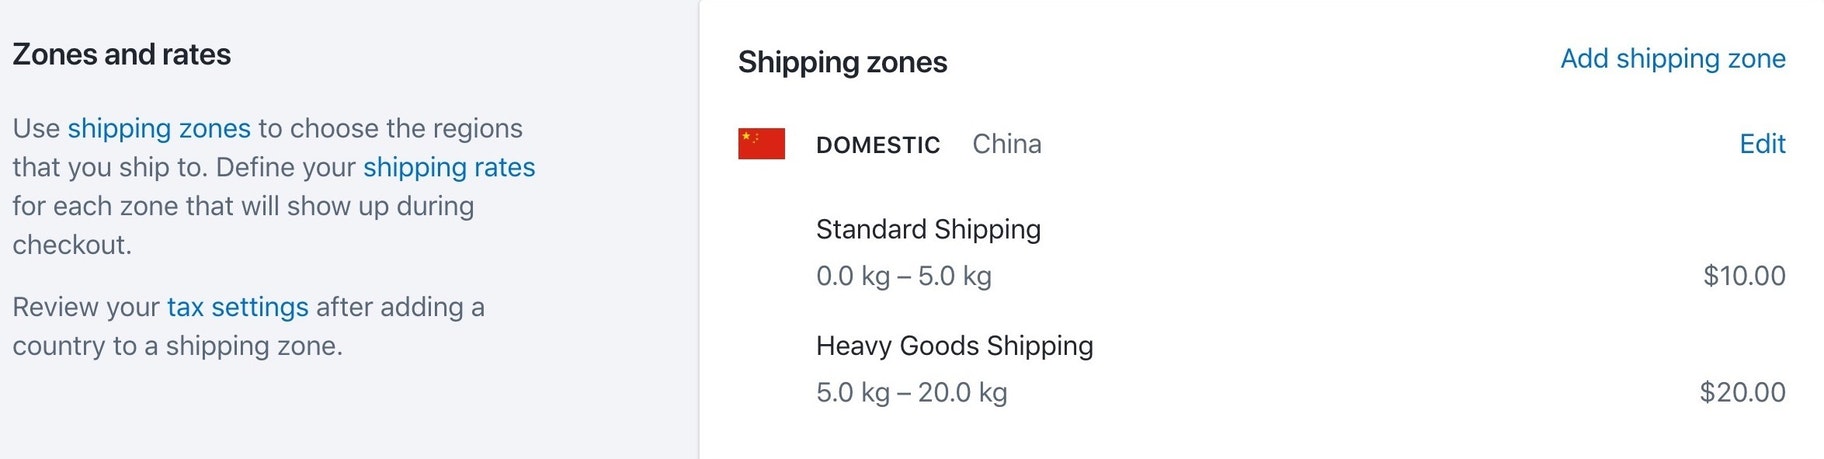 Shipping zones